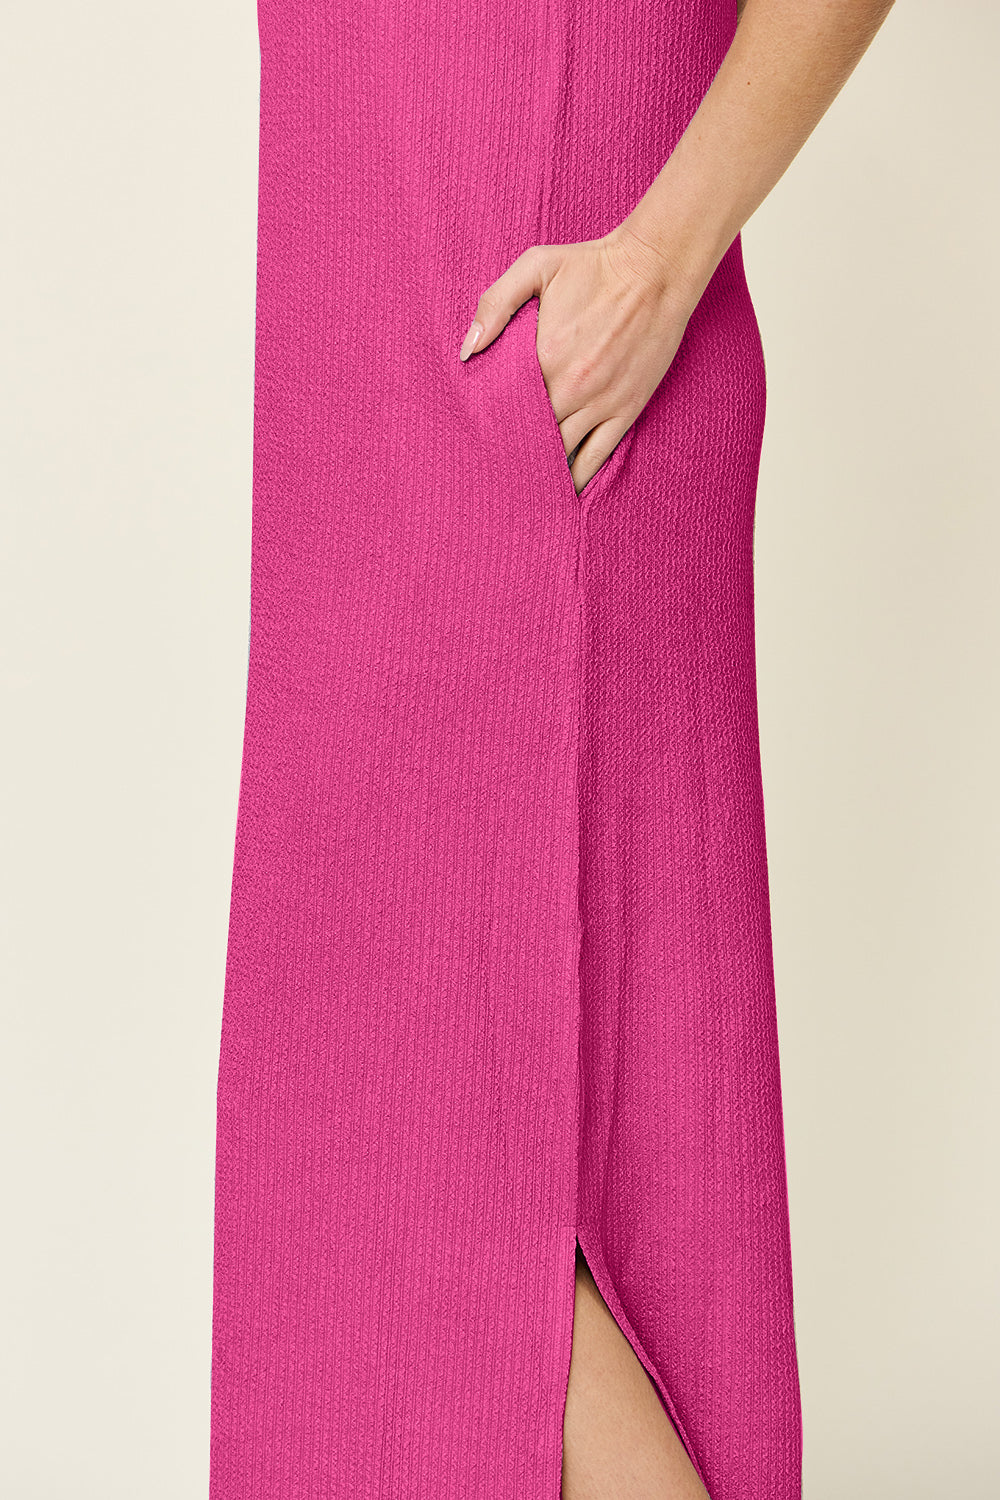 Double Take Full Size Texture Mock Neck Sleeveless Maxi Dress